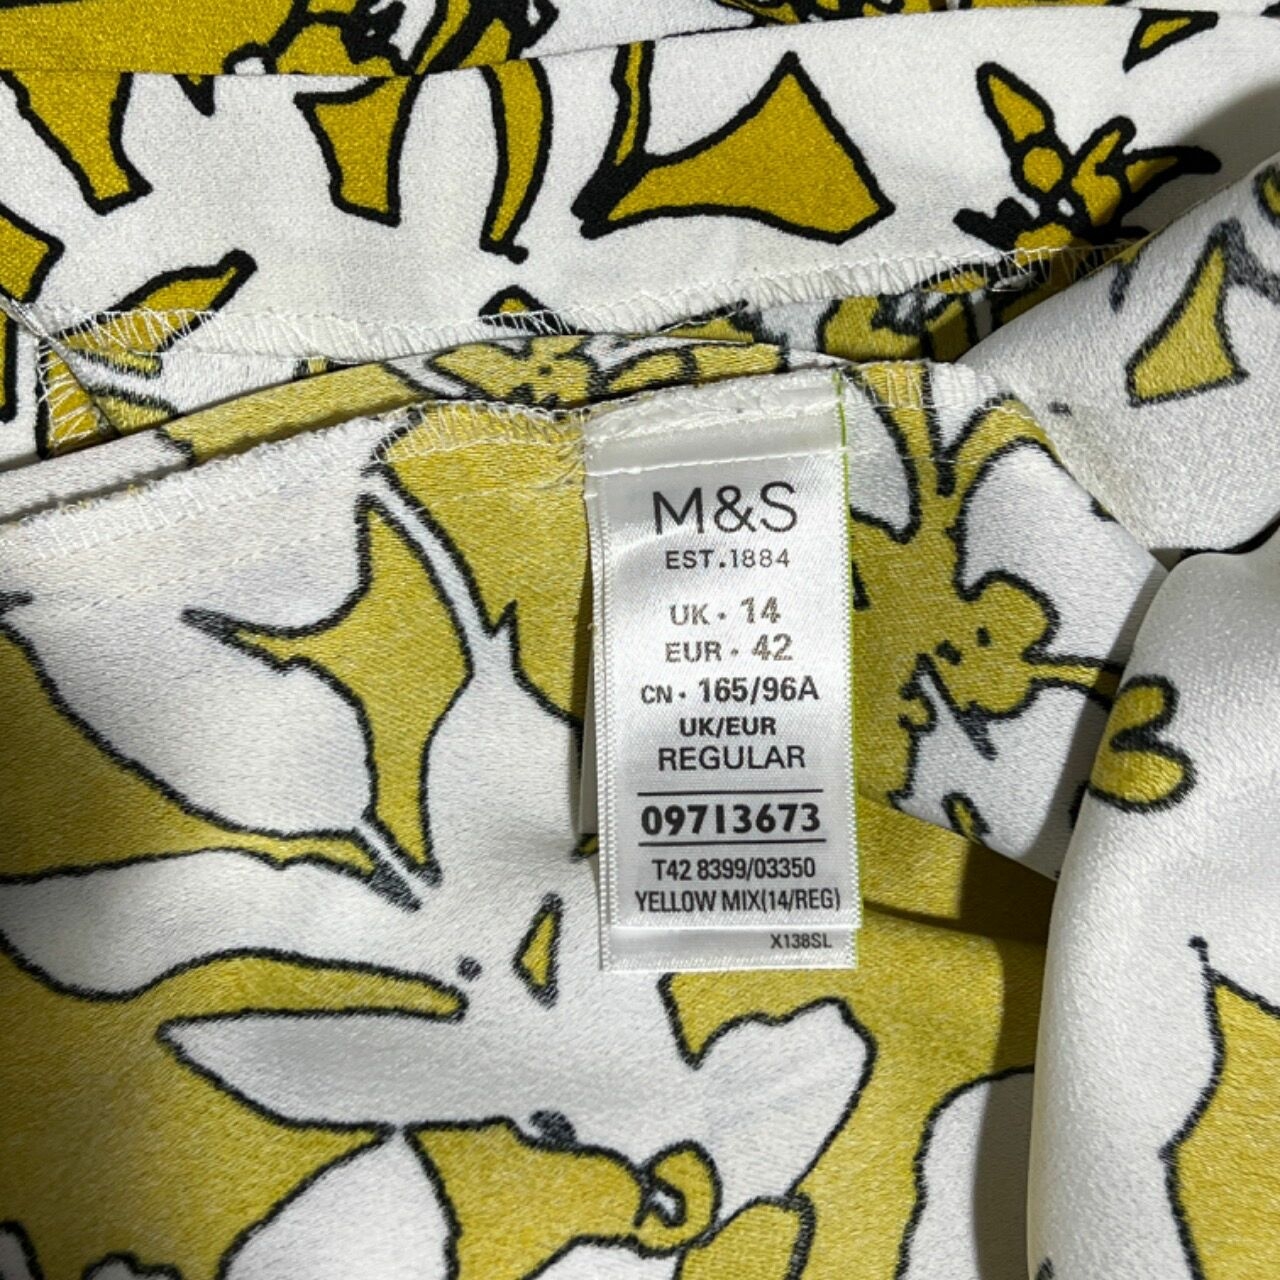 Marks & Spencer Mustard Floral Midi Dress